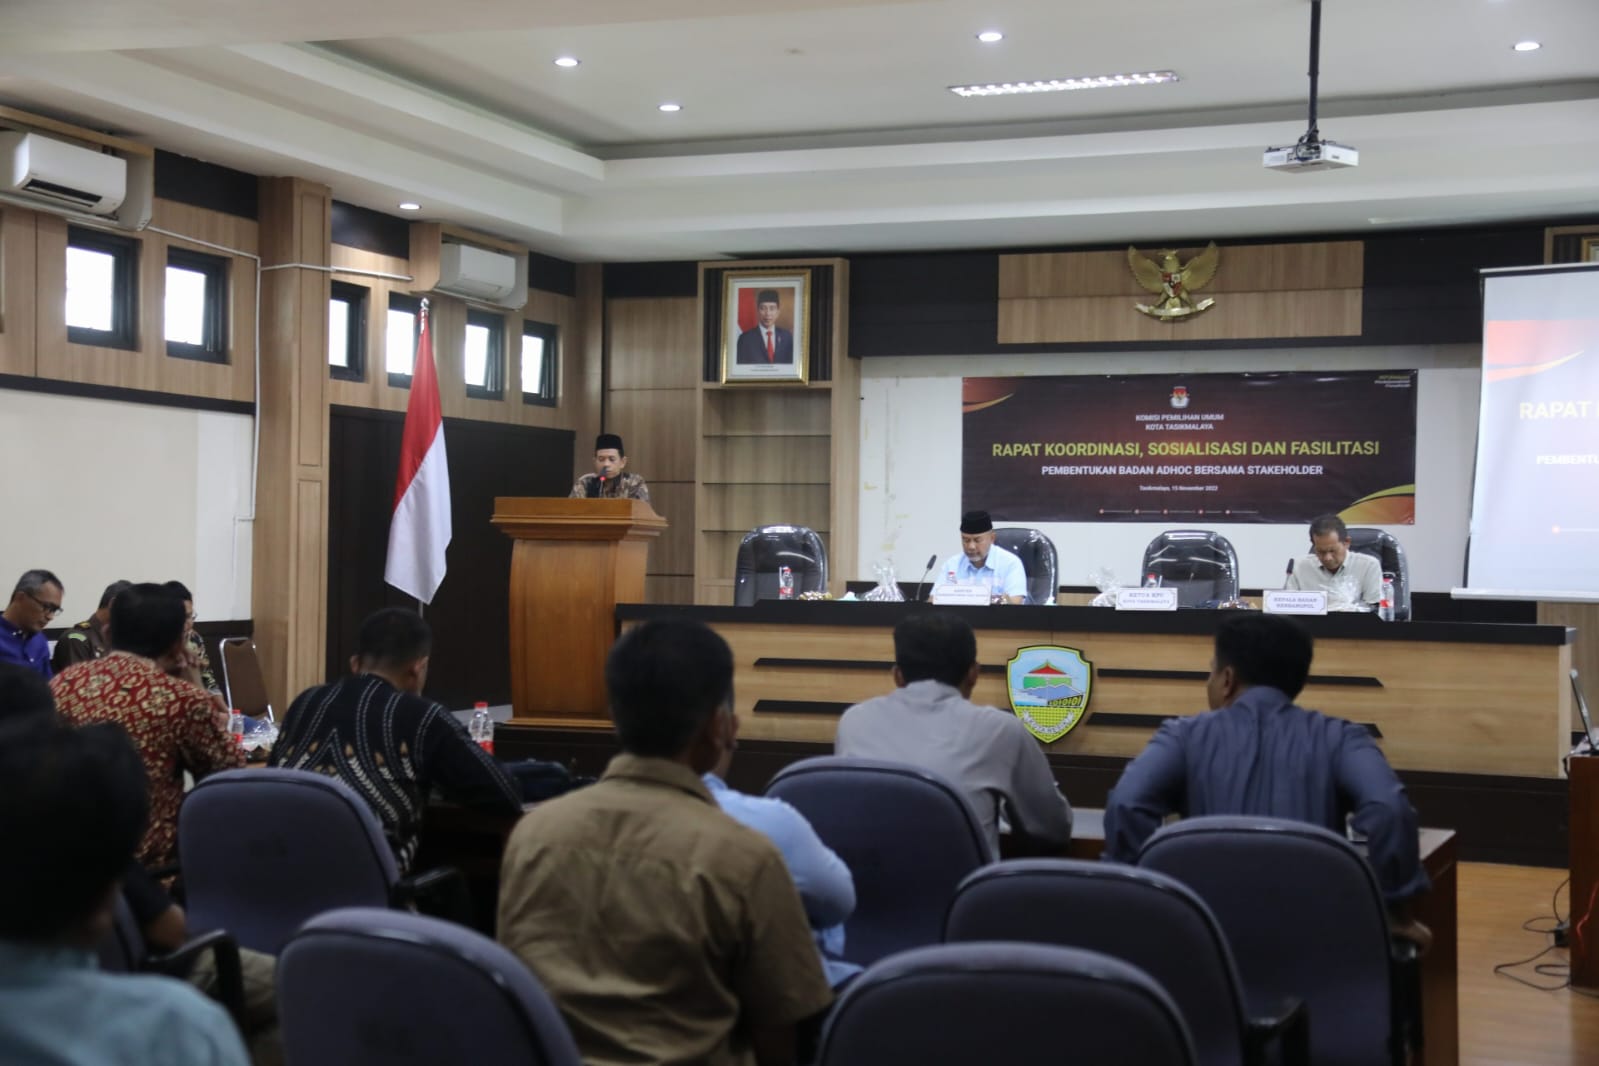 KPU dan Pemkot Tasik Rakor Bahas Sosialisasi Badan Adhoc Jelang Pemilu Serentak 2024